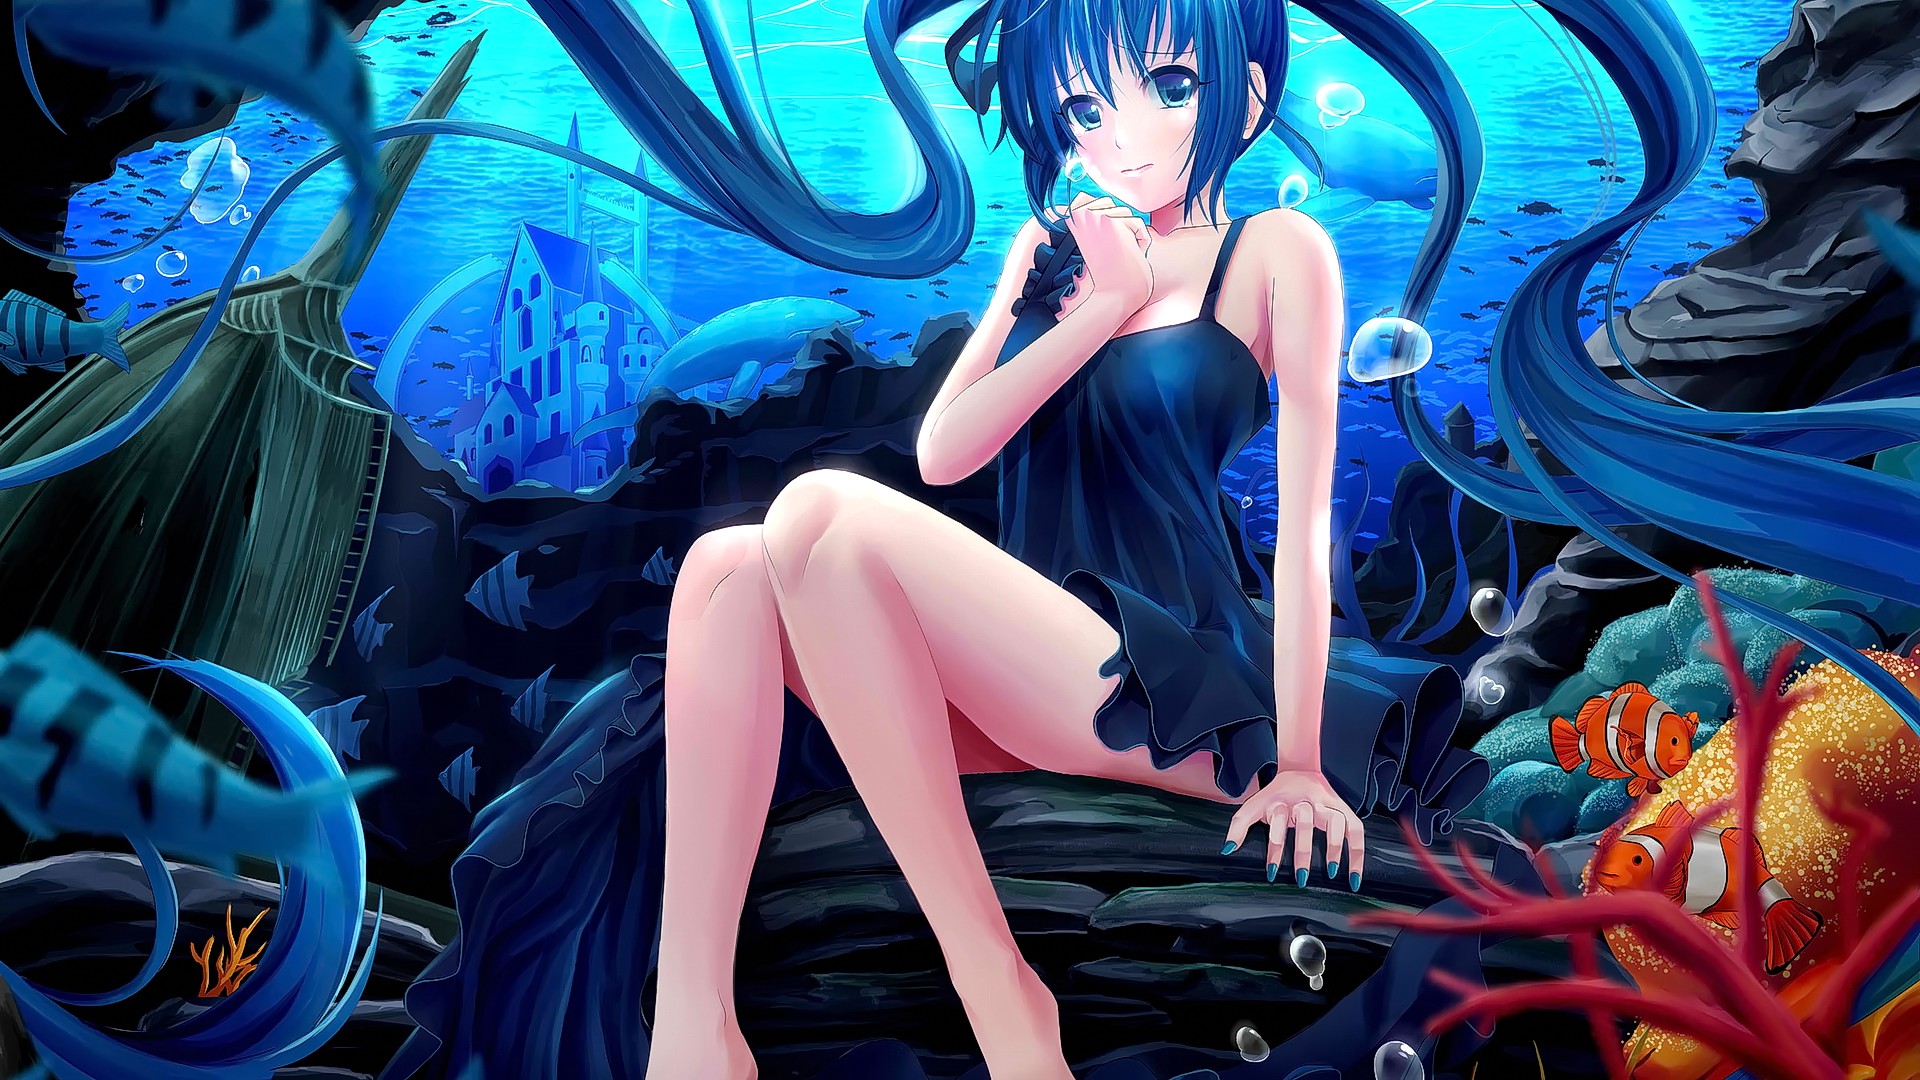 Anime 1920x1080 Vocaloid Hatsune Miku anime anime girls thighs legs blue hair blue eyes fish underwater animals minidress blue dress sitting fantasy art fantasy girl